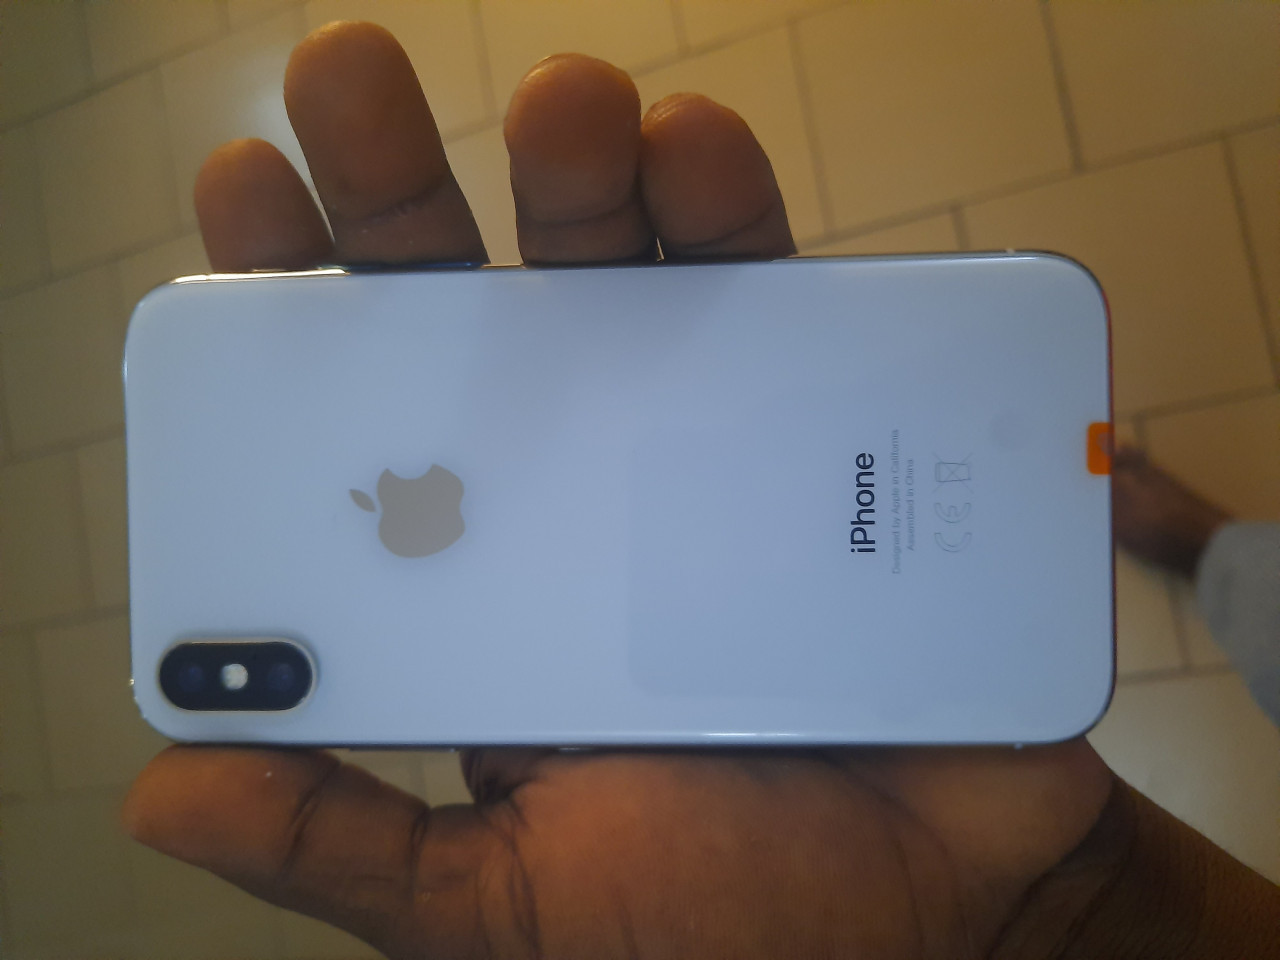 Apple iPhone X, Téléphones Mobiles, Conakry